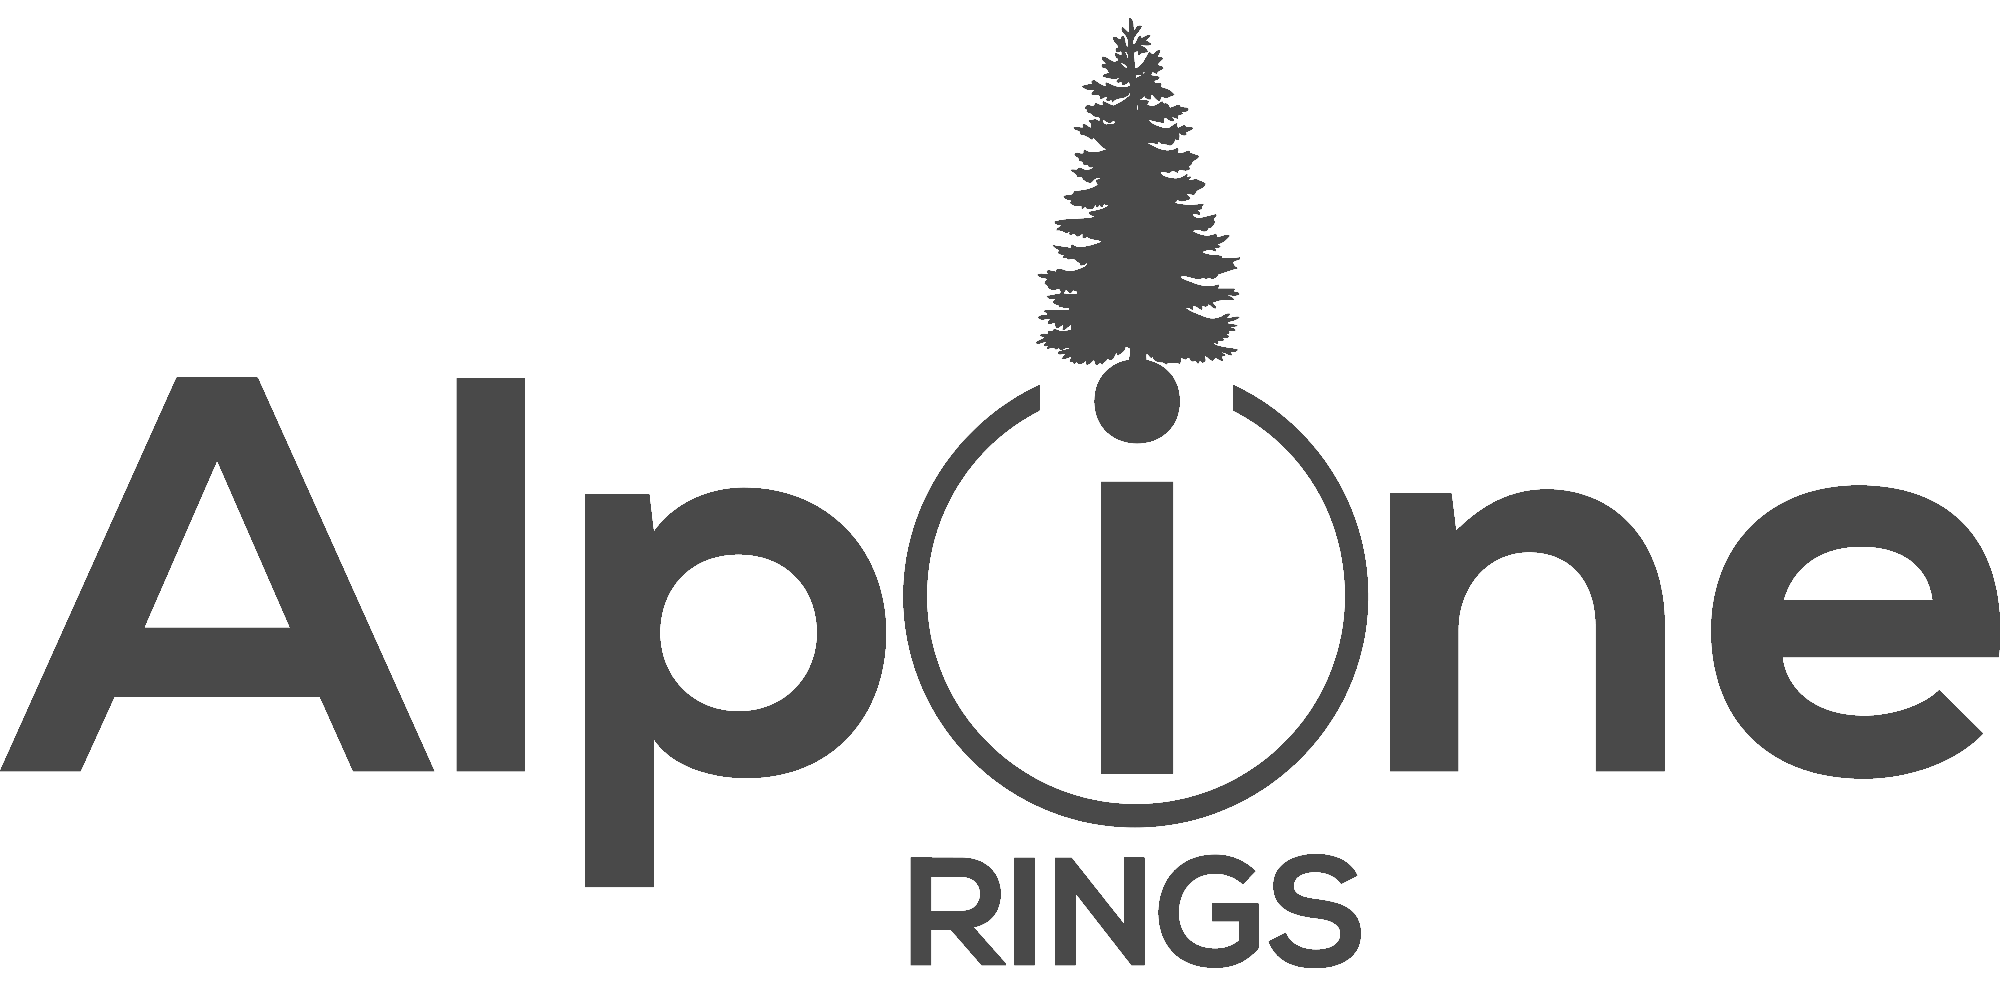 Alpine Rings